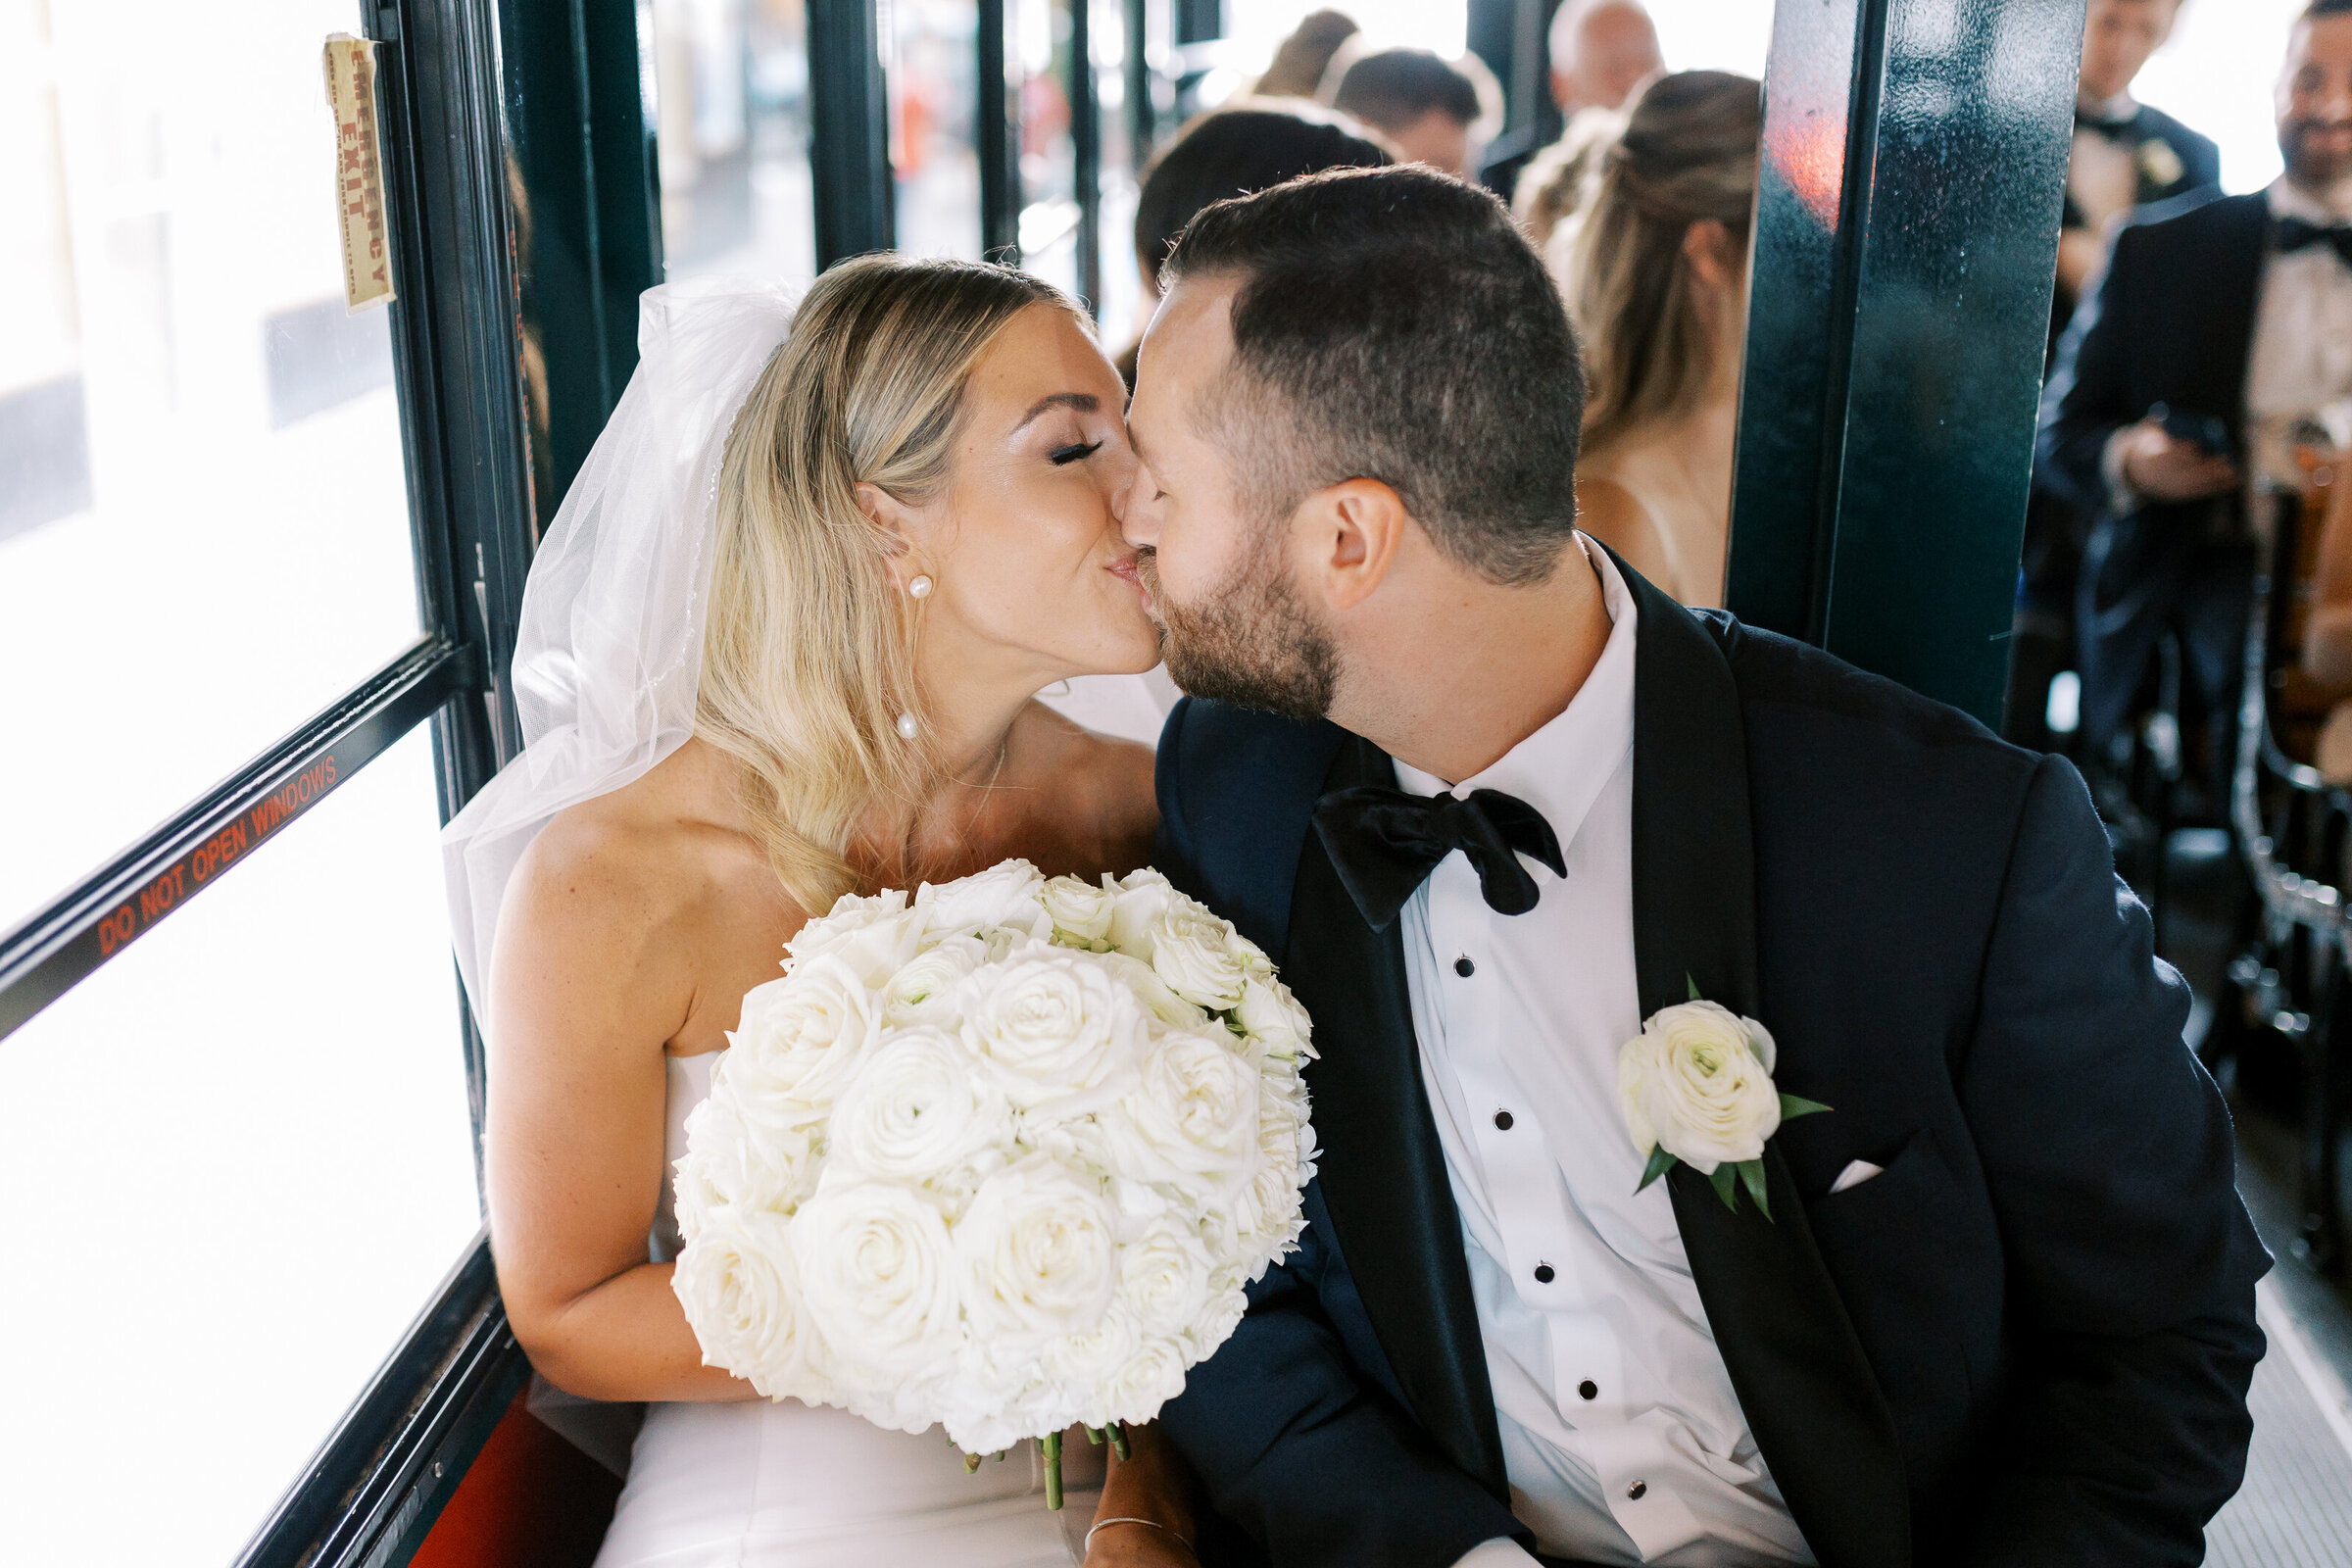 A couple kisses on a trolley ride in Cicinnati.